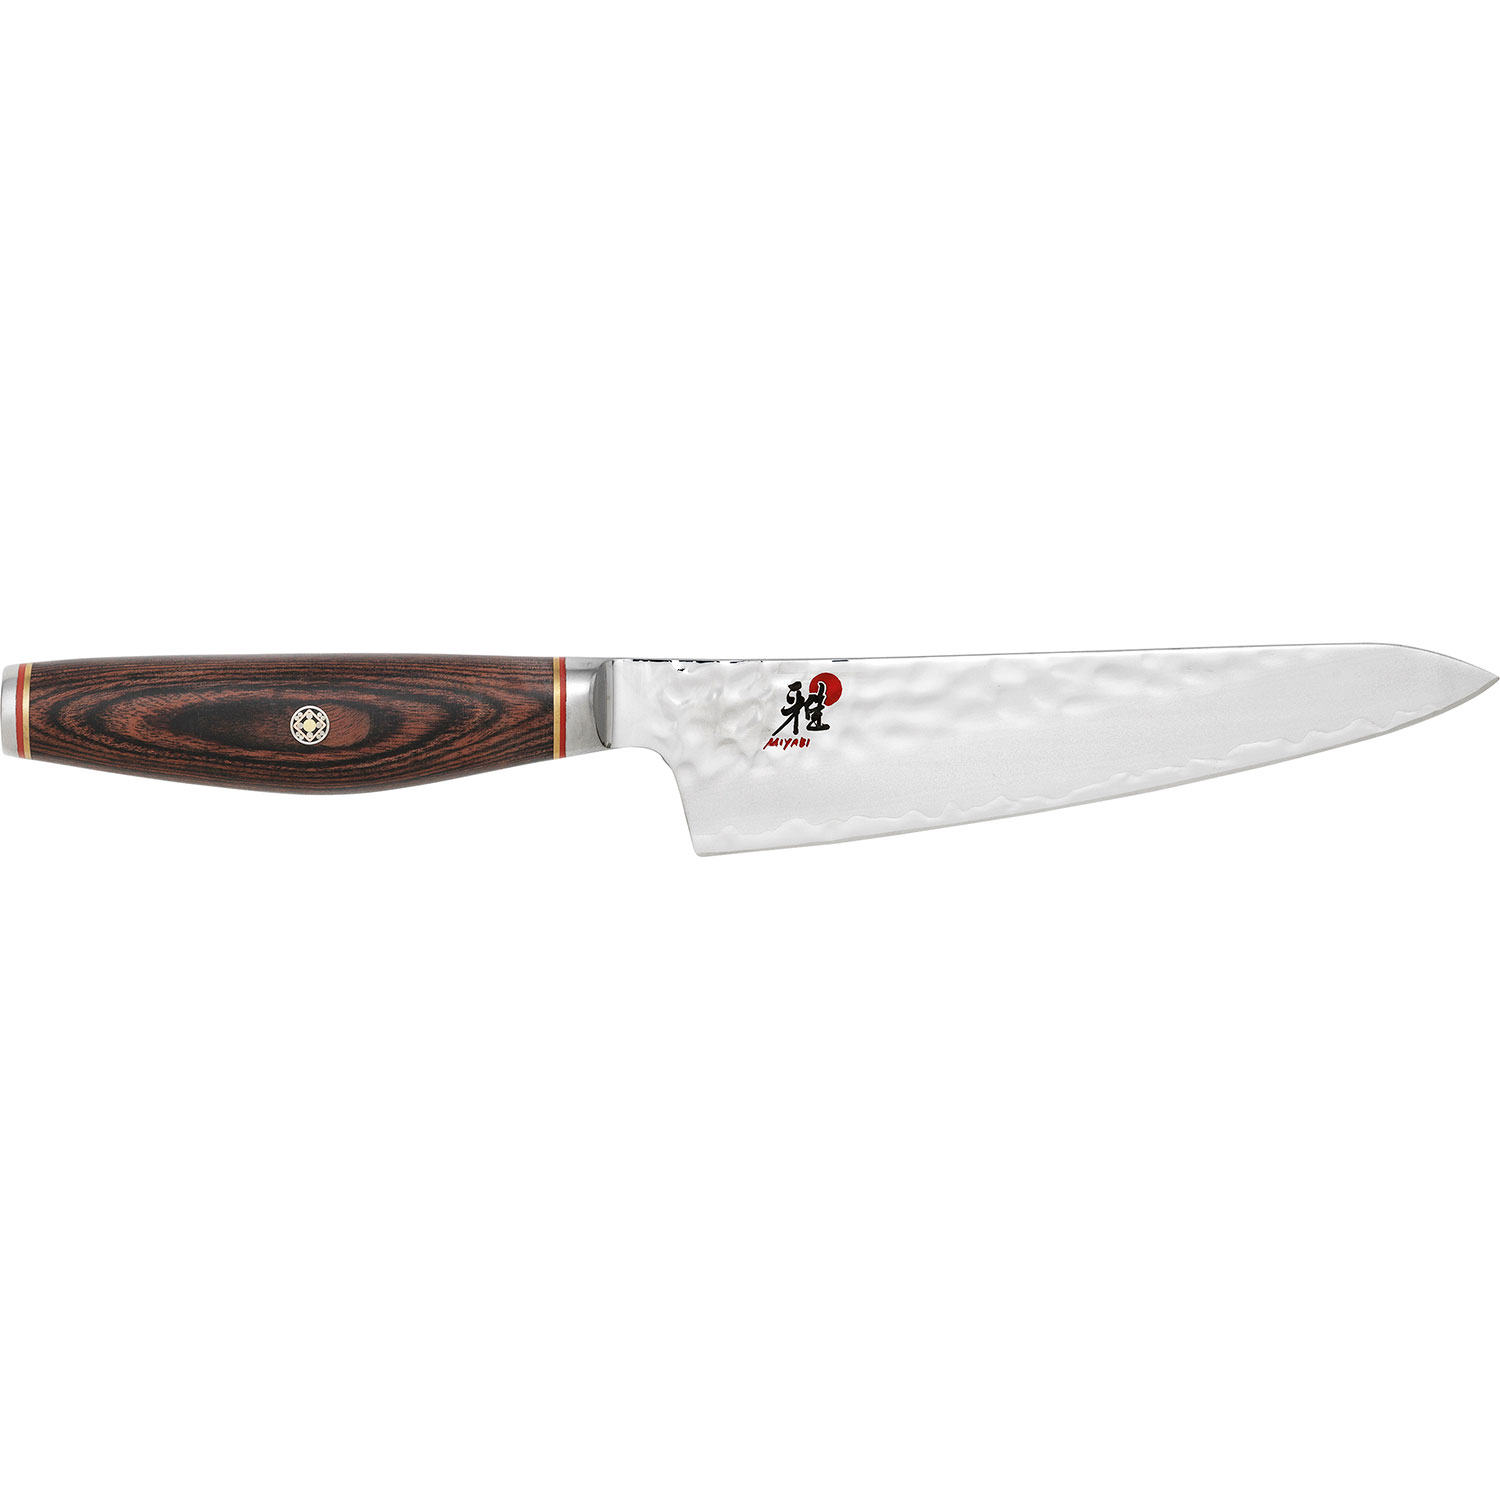 https://api-prod.royaldesign.se/api/products/image/11/miyabi-miyabi-artisan-6000mct-shotoh-scale-knife-14-cm-0